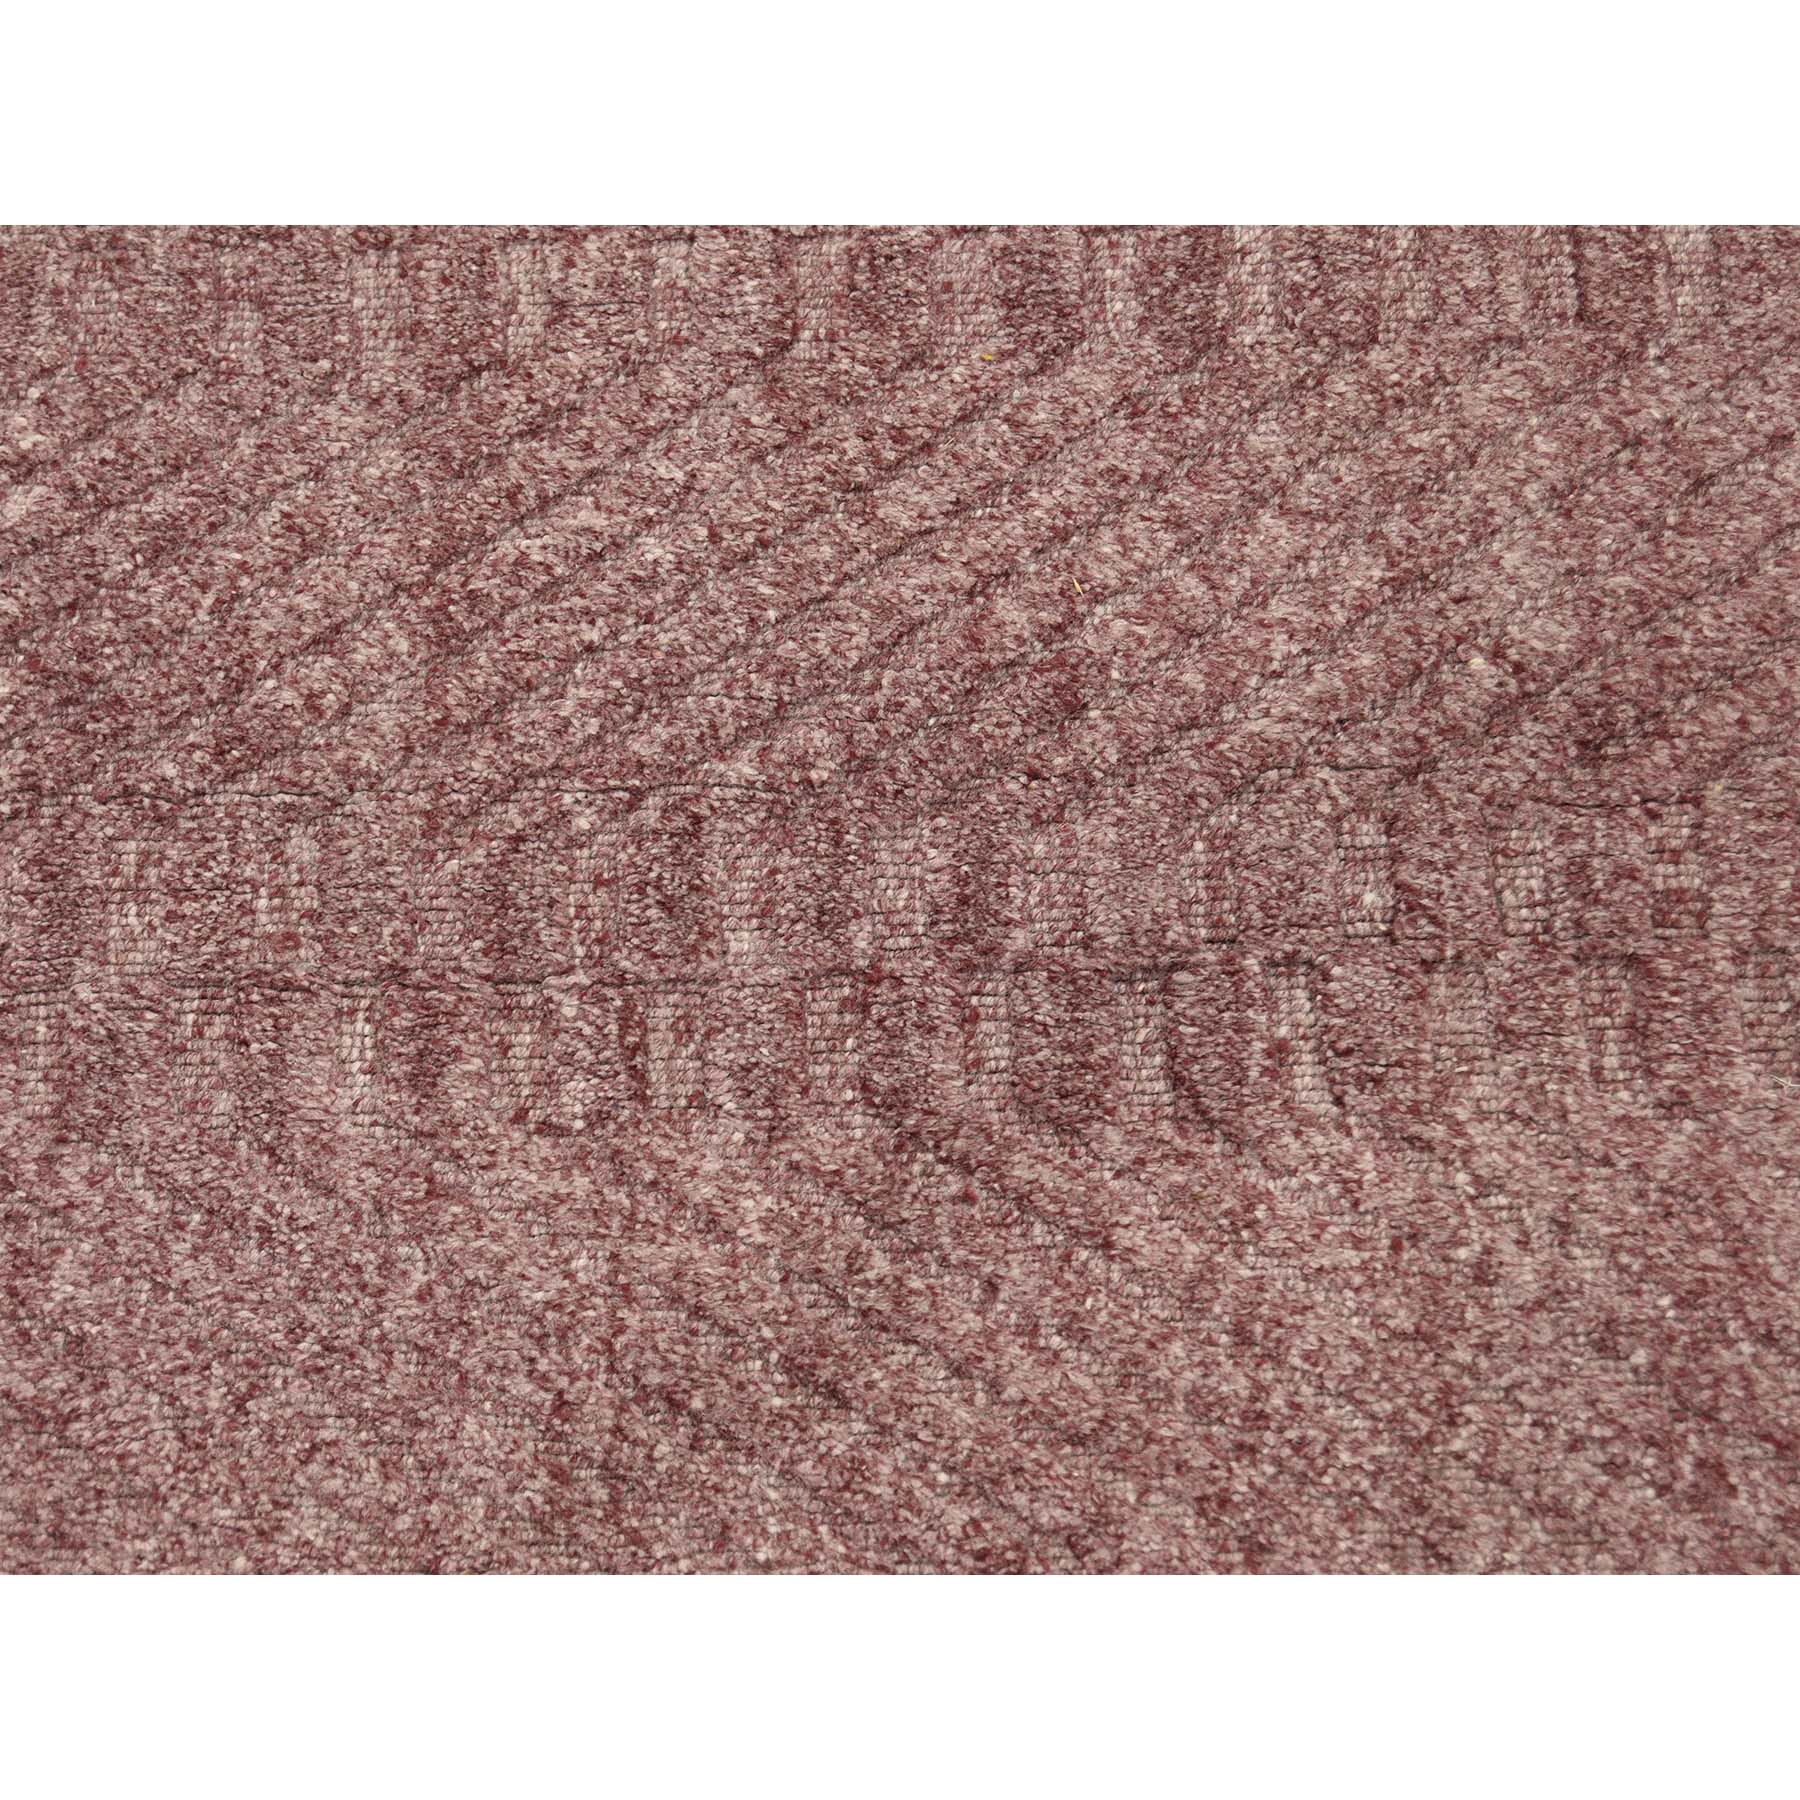 5-1 x7-1  Hand-Loomed Purple Tone on Tone Pure Wool Oriental Rug 